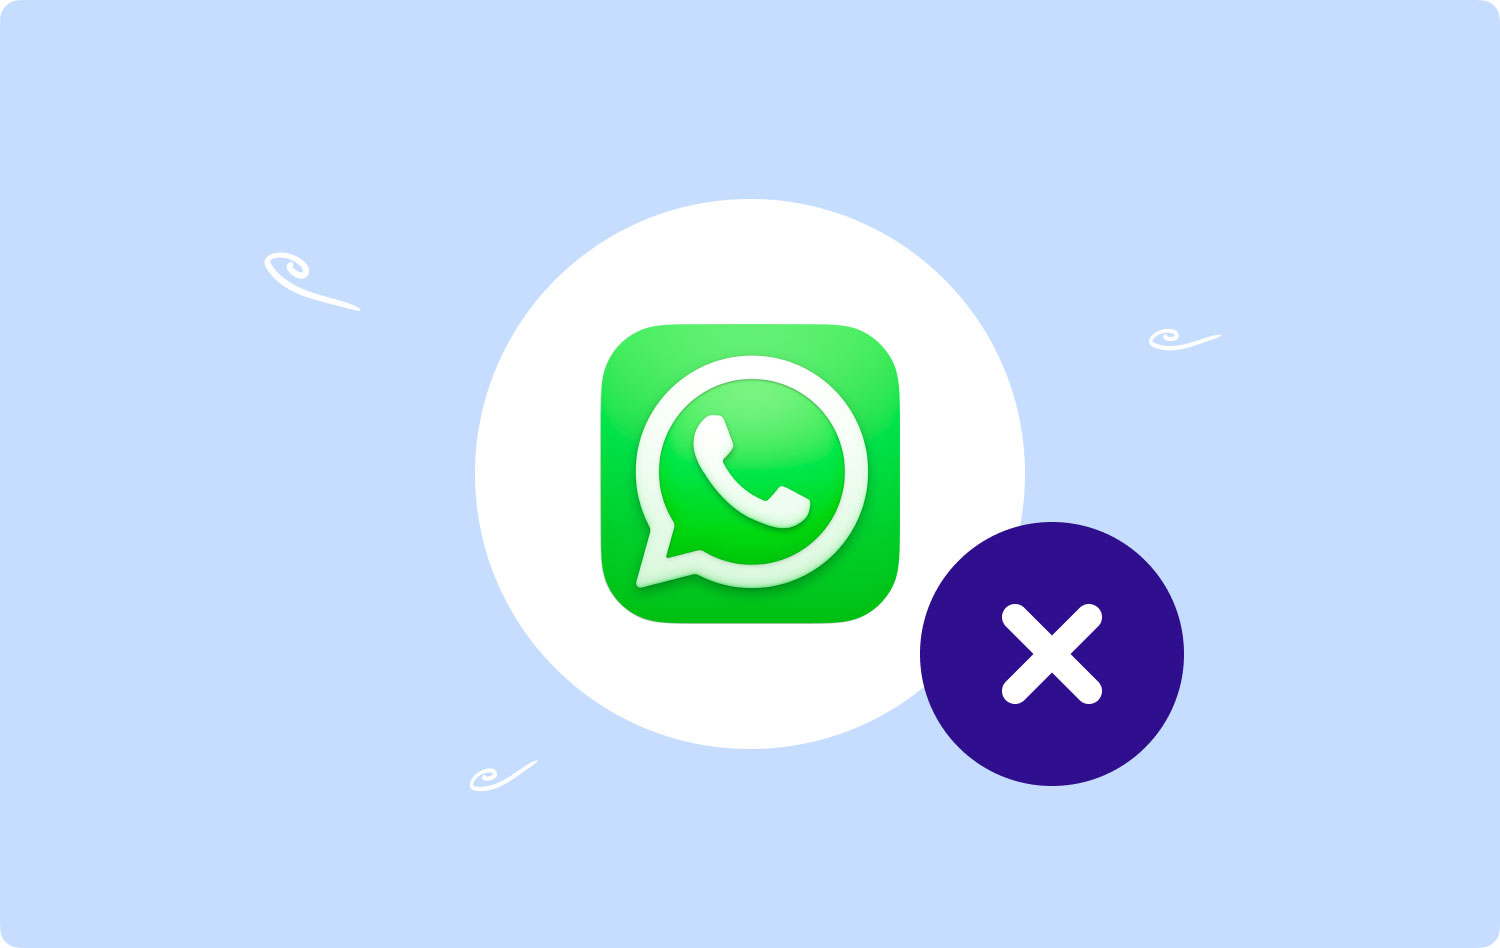 How to Uninstall WhatsApp on Mac